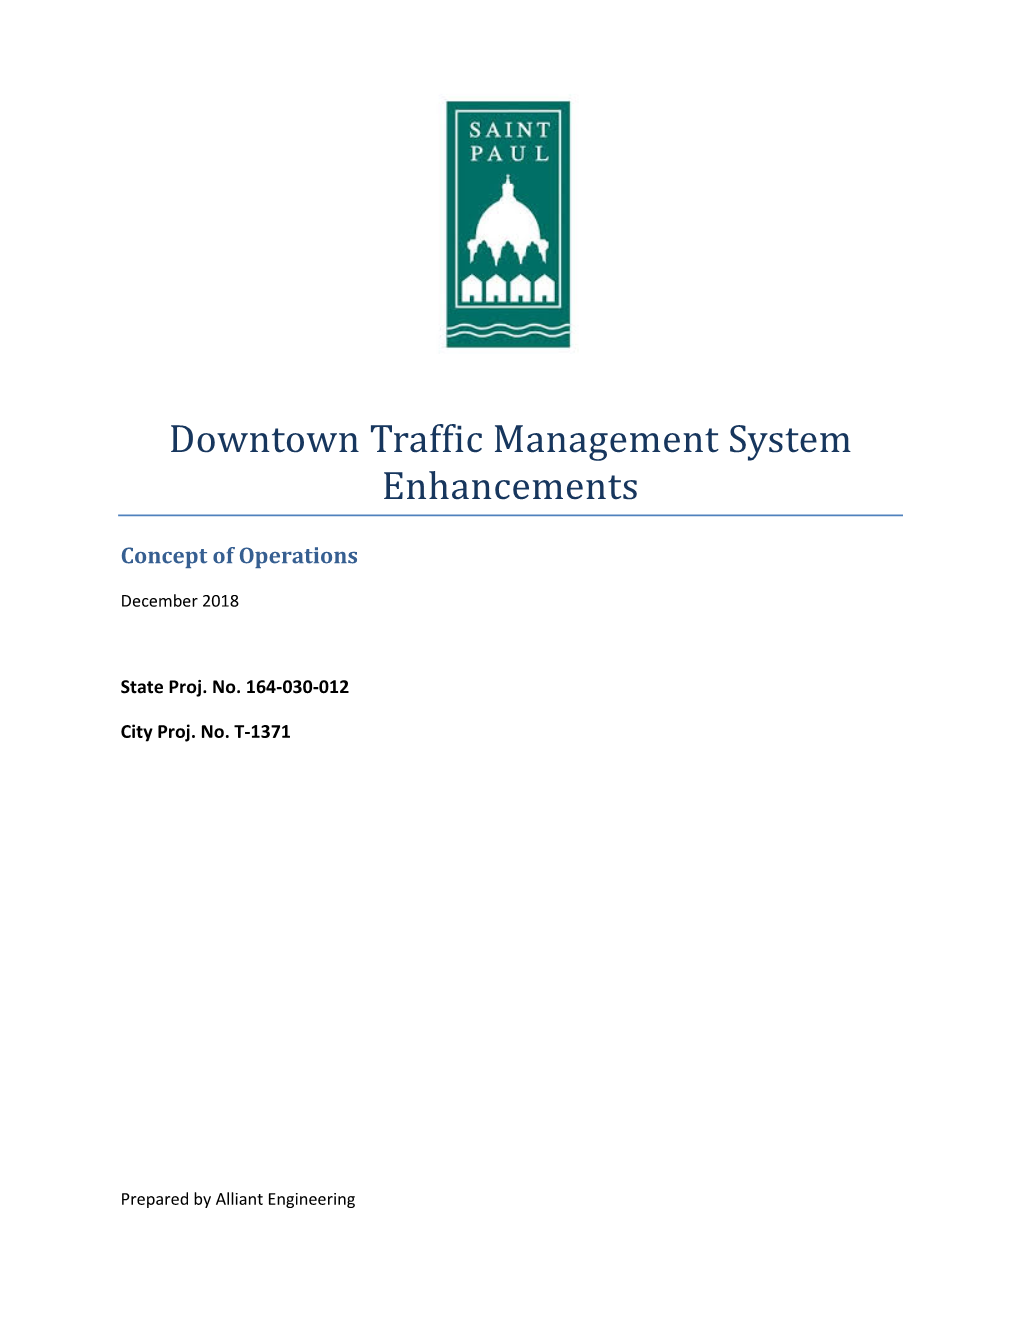 Downtown Traffic Management System Enhancements